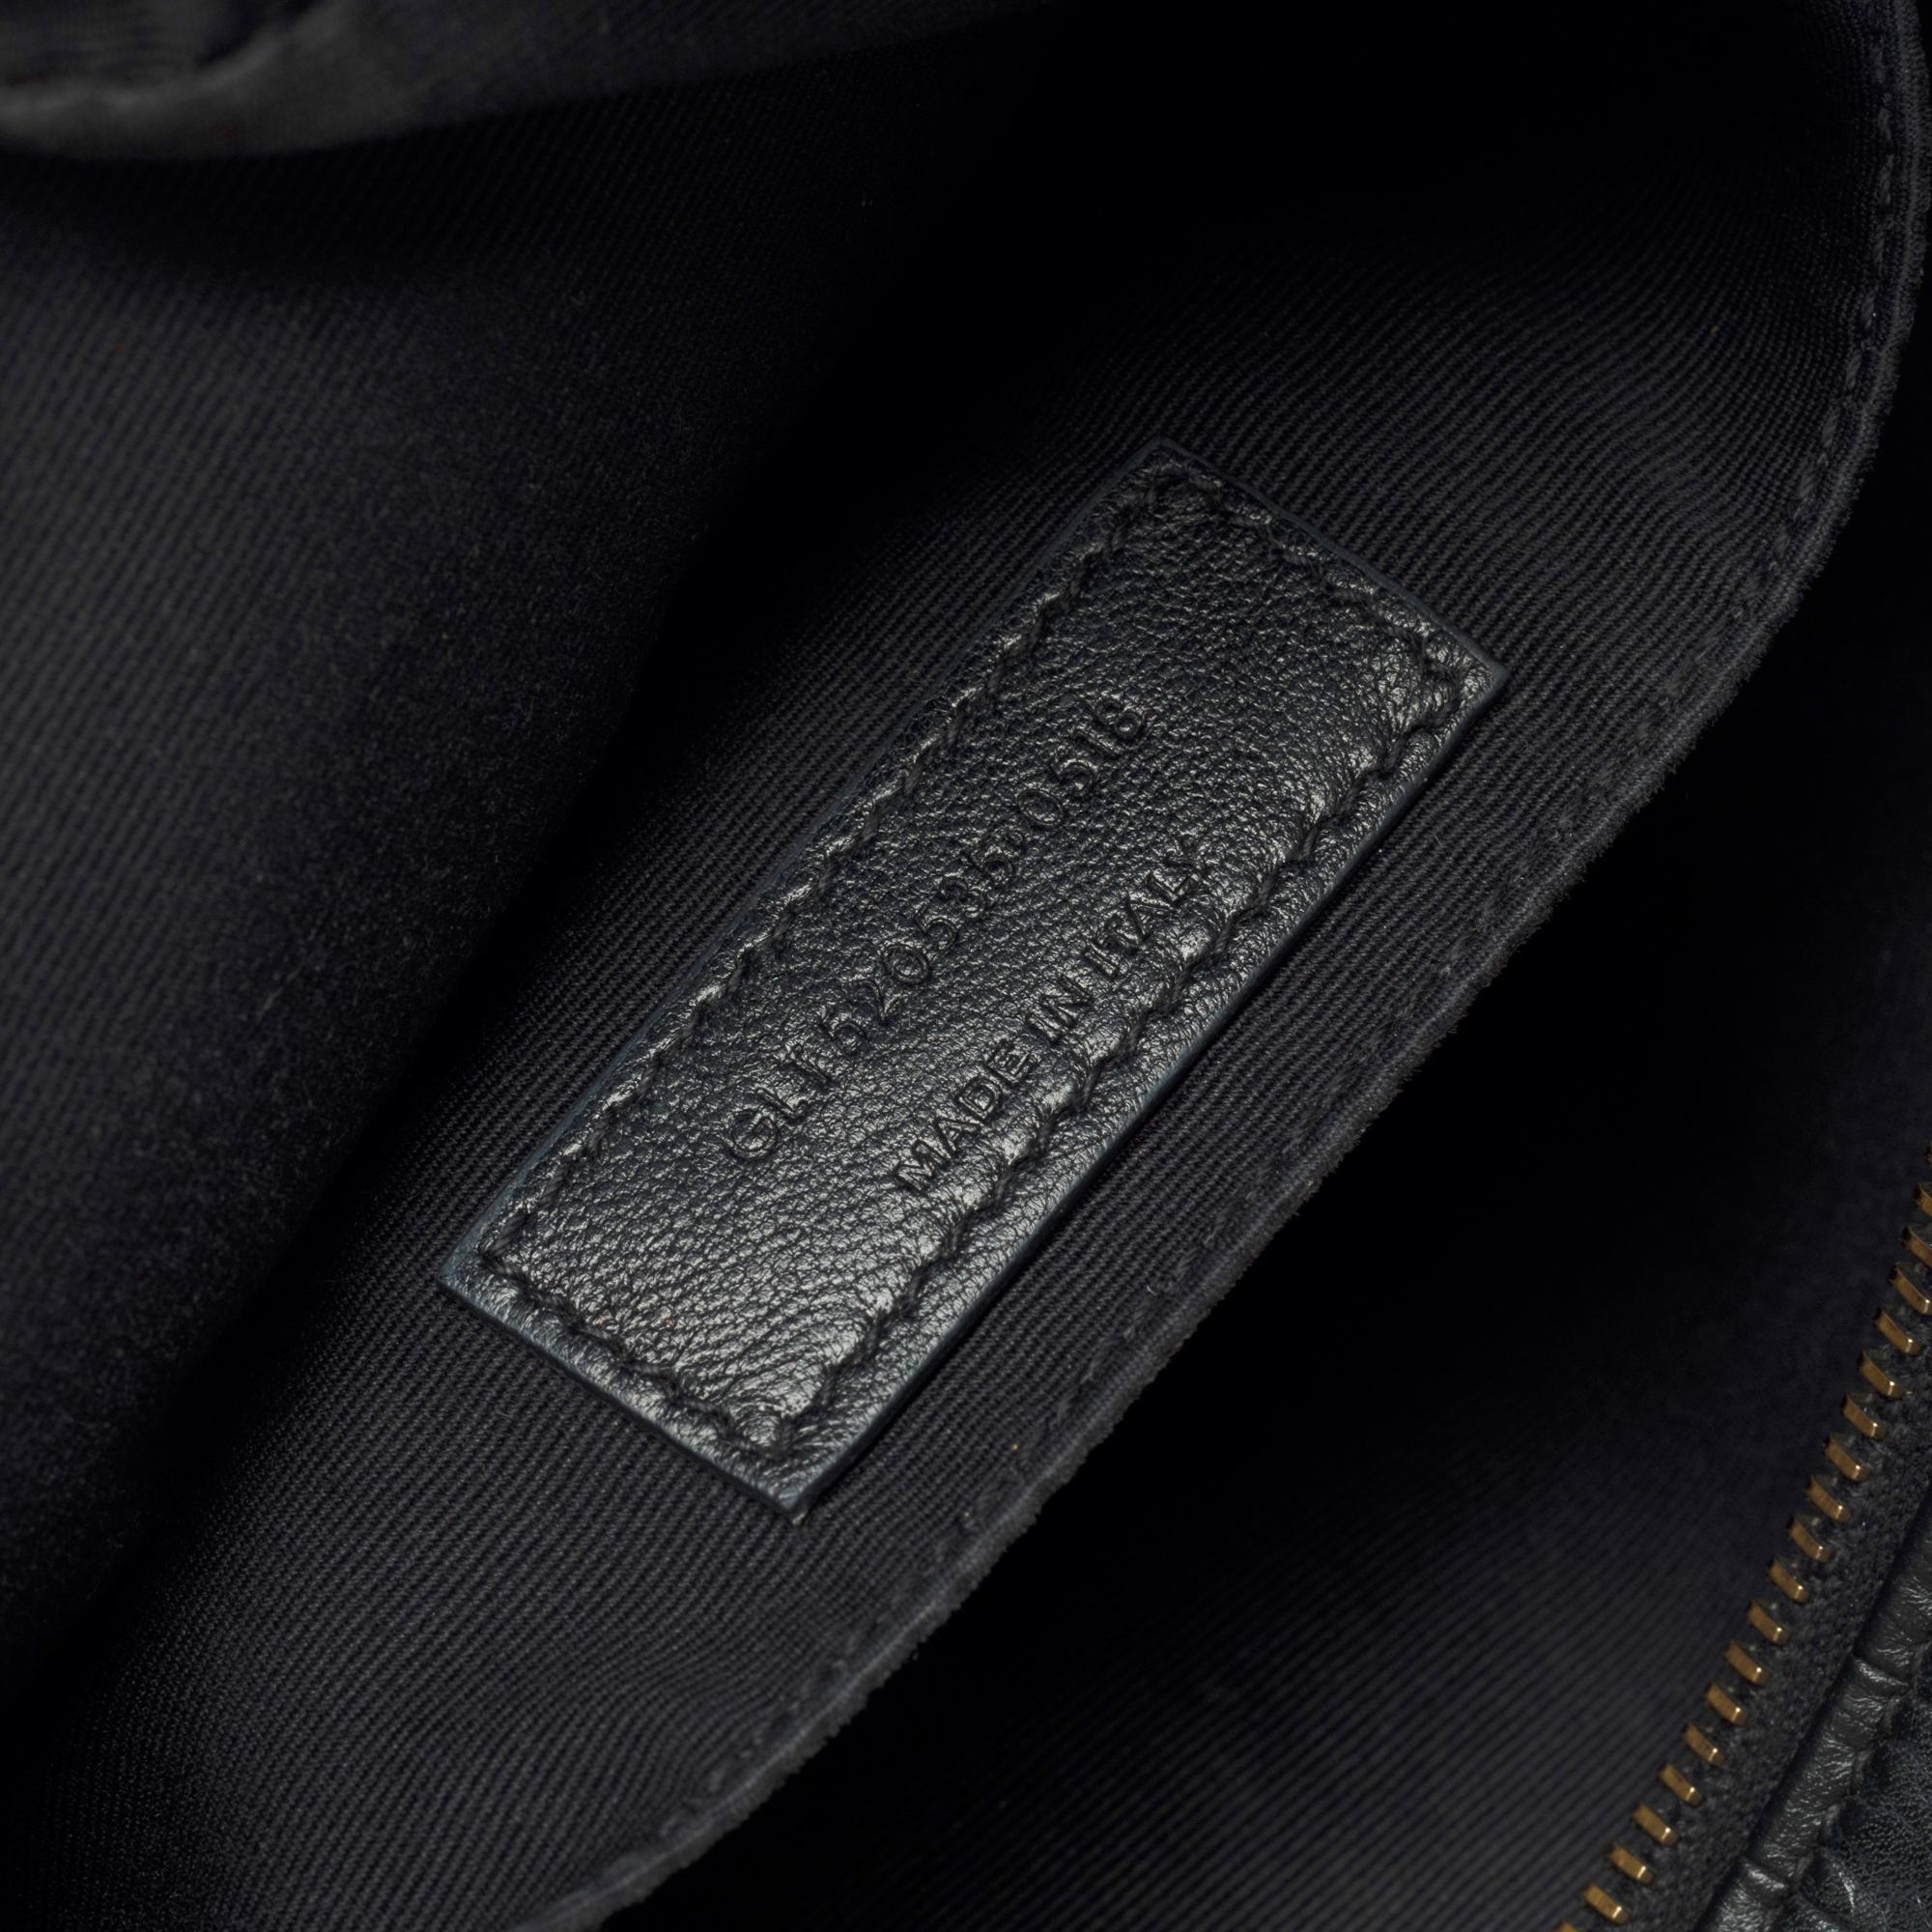 YSL Lou Camera shoulder bag in Black Crocodile style calf leather, SHW 3